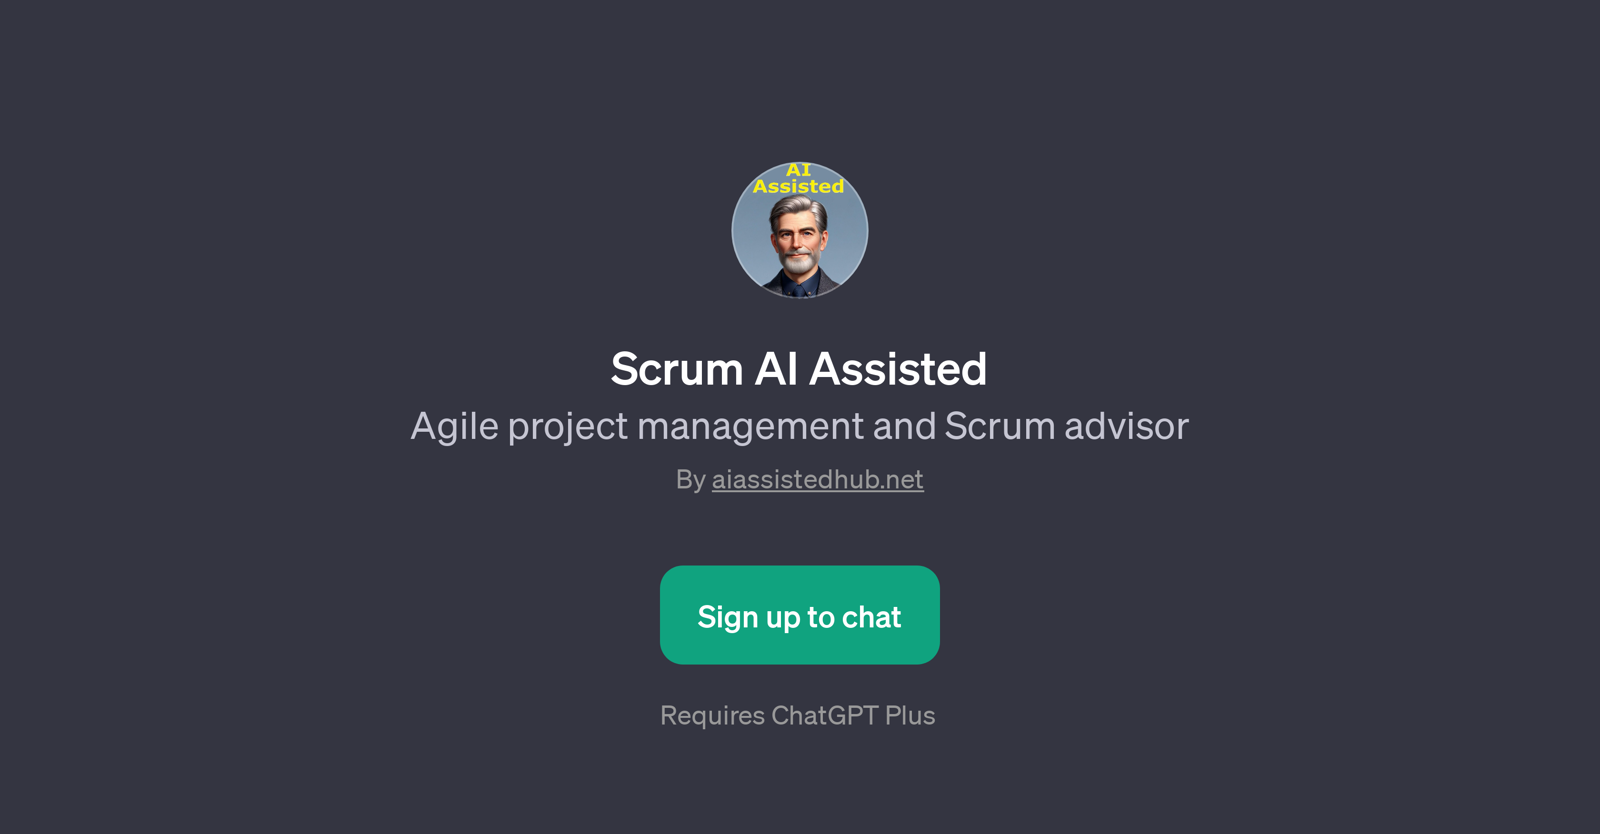 Scrum AI Assisted website